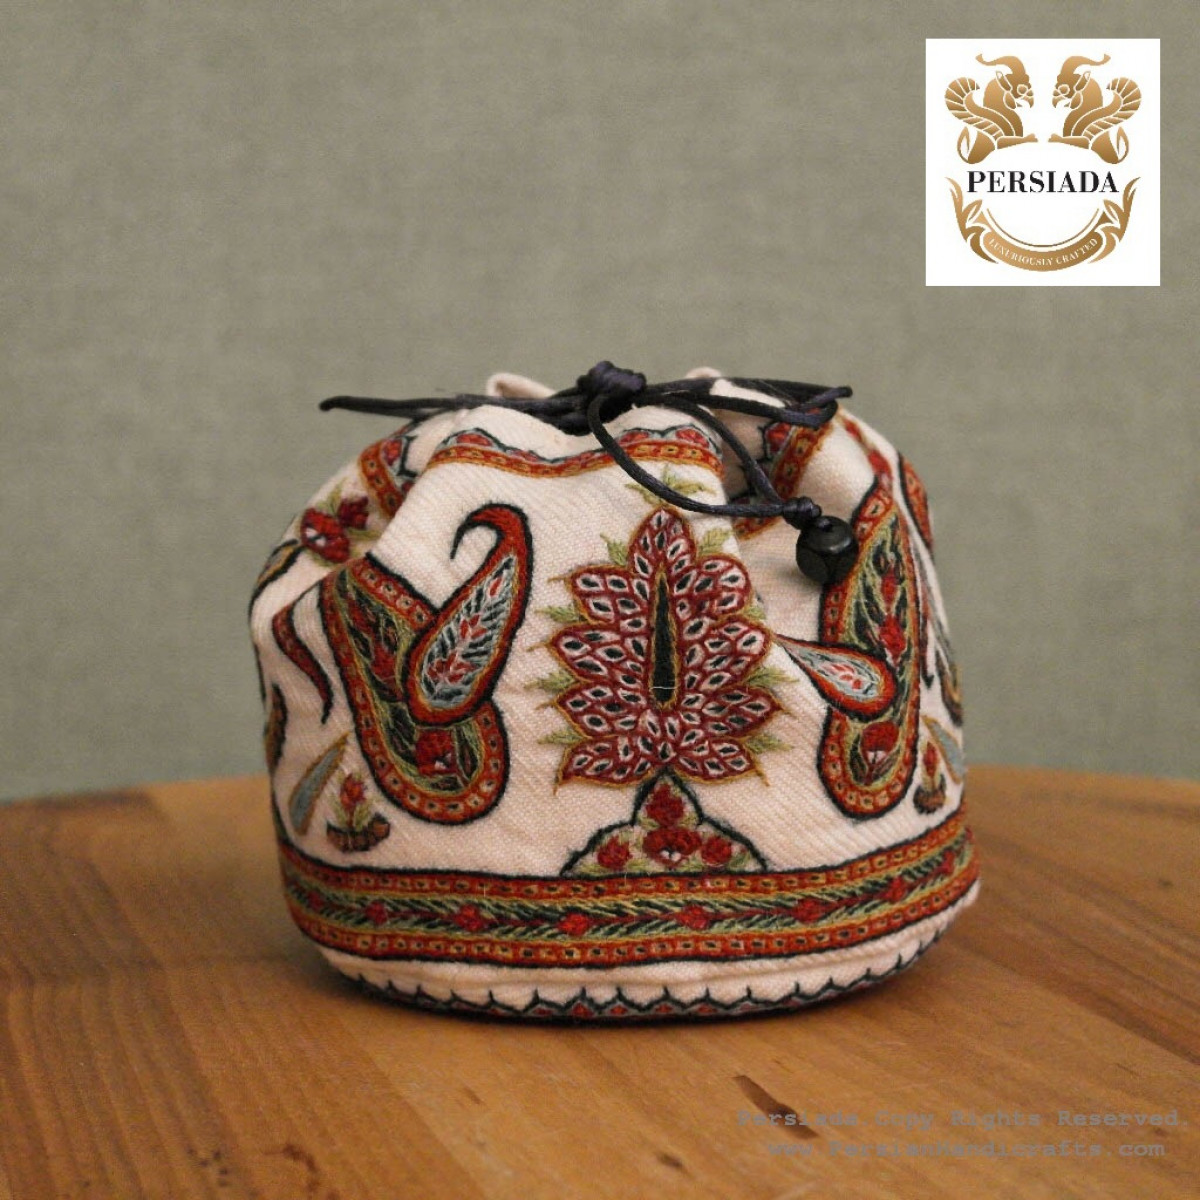 Travel Cosmetics Bag | Pateh Needlework | PHP1015-Persiada Persian Handicrafts